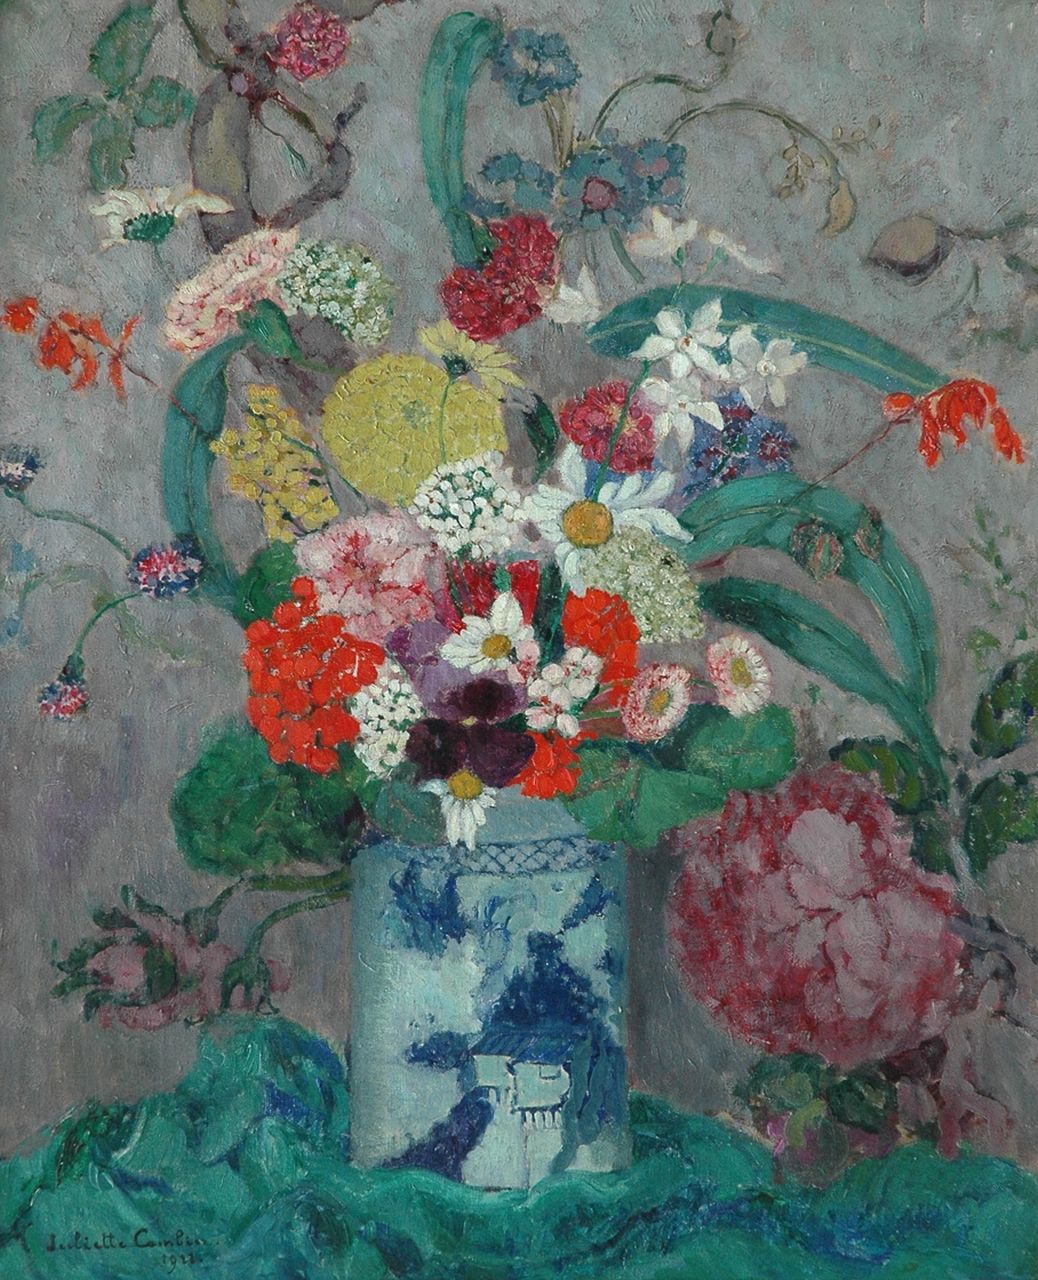 Cambier J.Z.  | 'Juliette' Ziane Cambier, A still life of flowers, Öl auf Leinwand 79,0 x 79,0 cm, signed l.r.